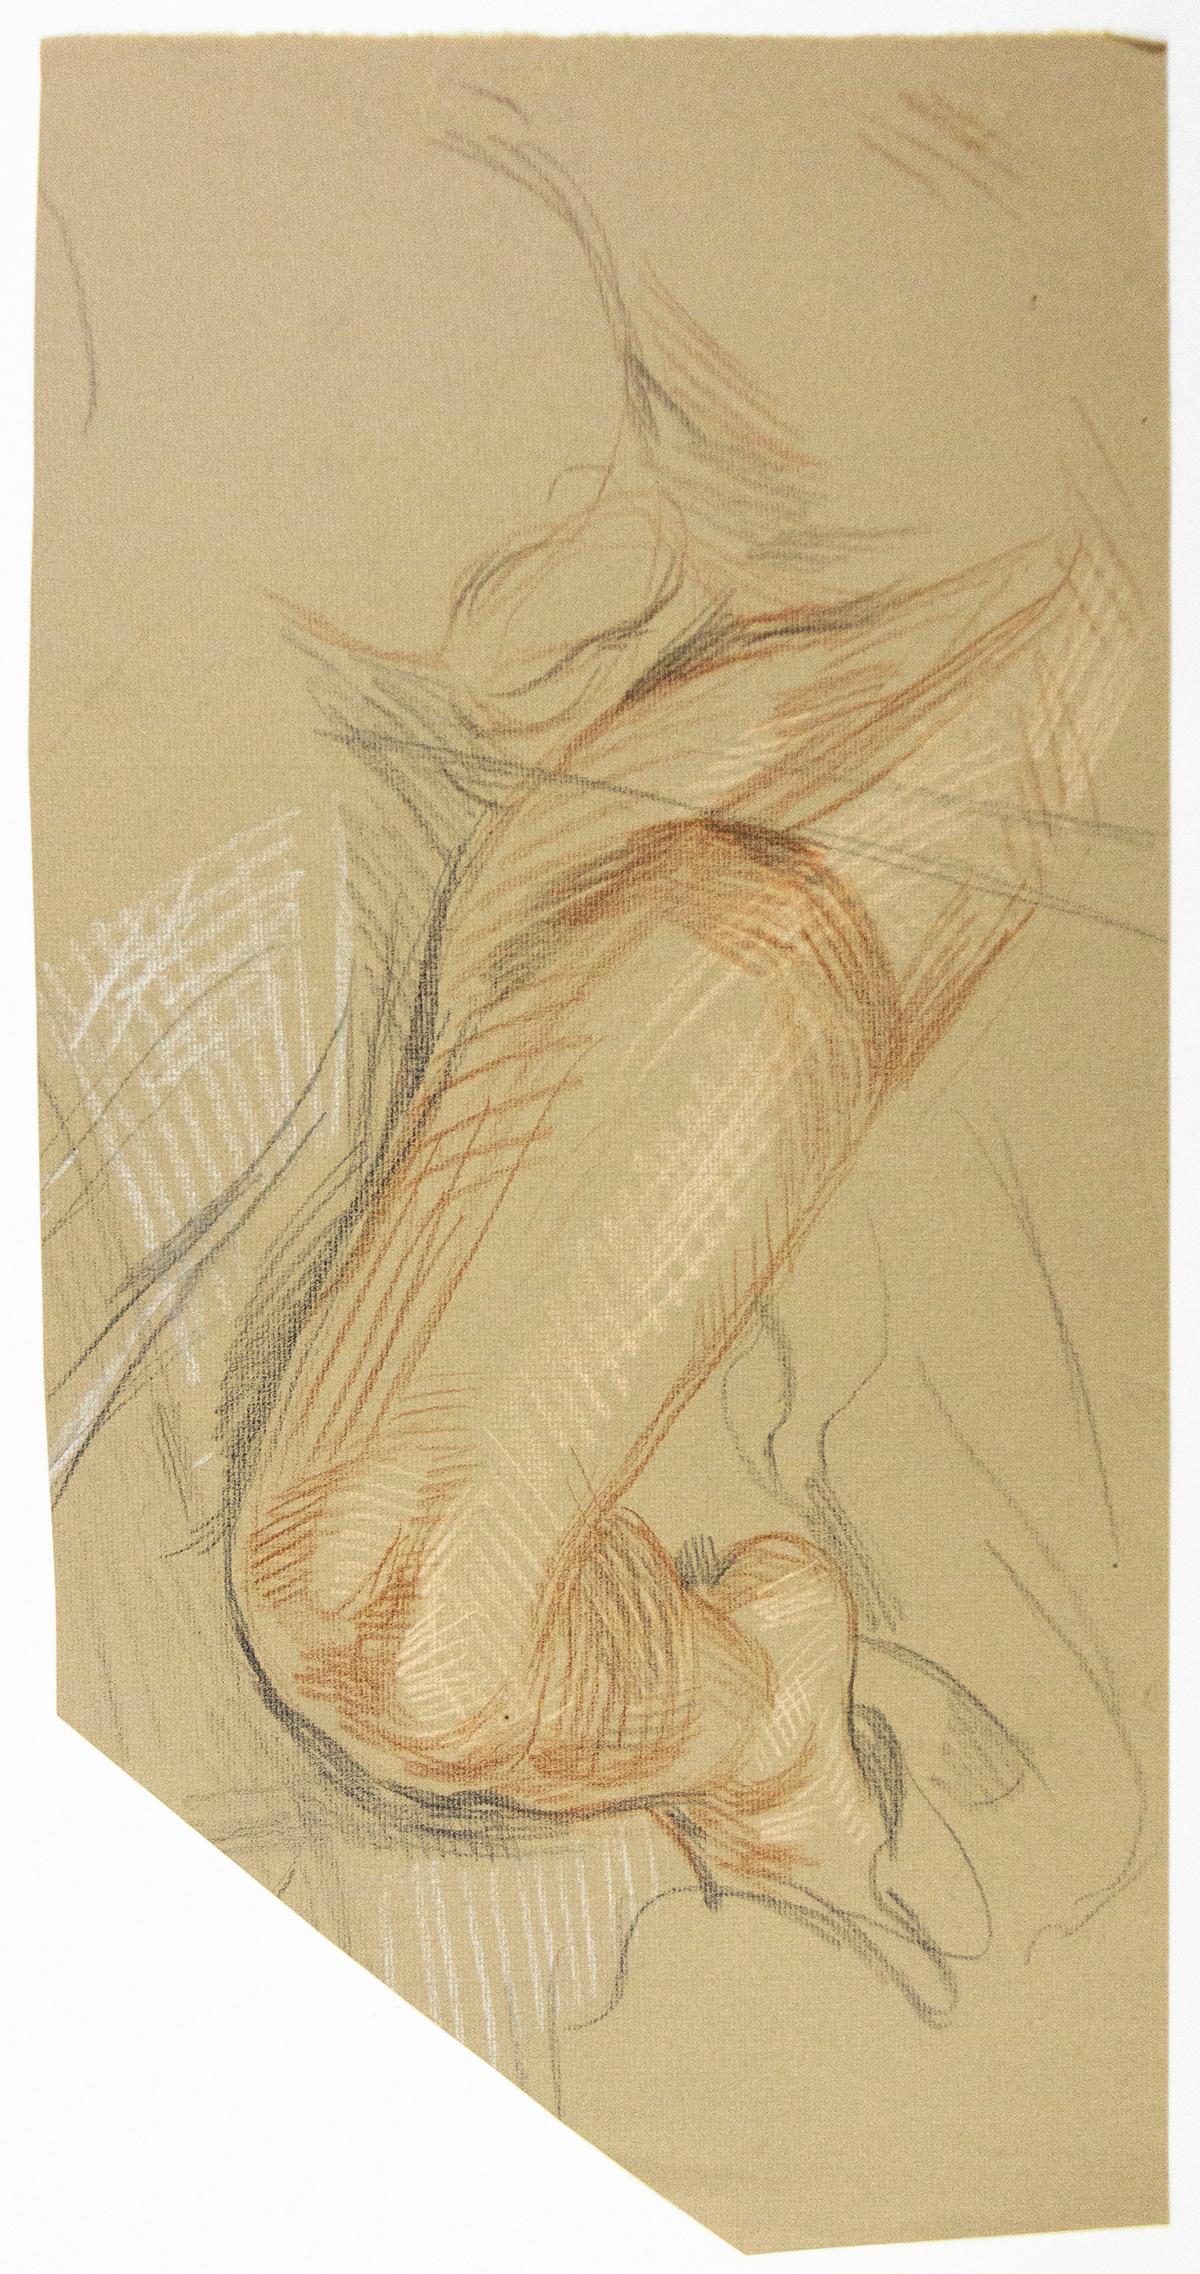 Paul Cadmus Figurative Art - Study of a Man's Leg